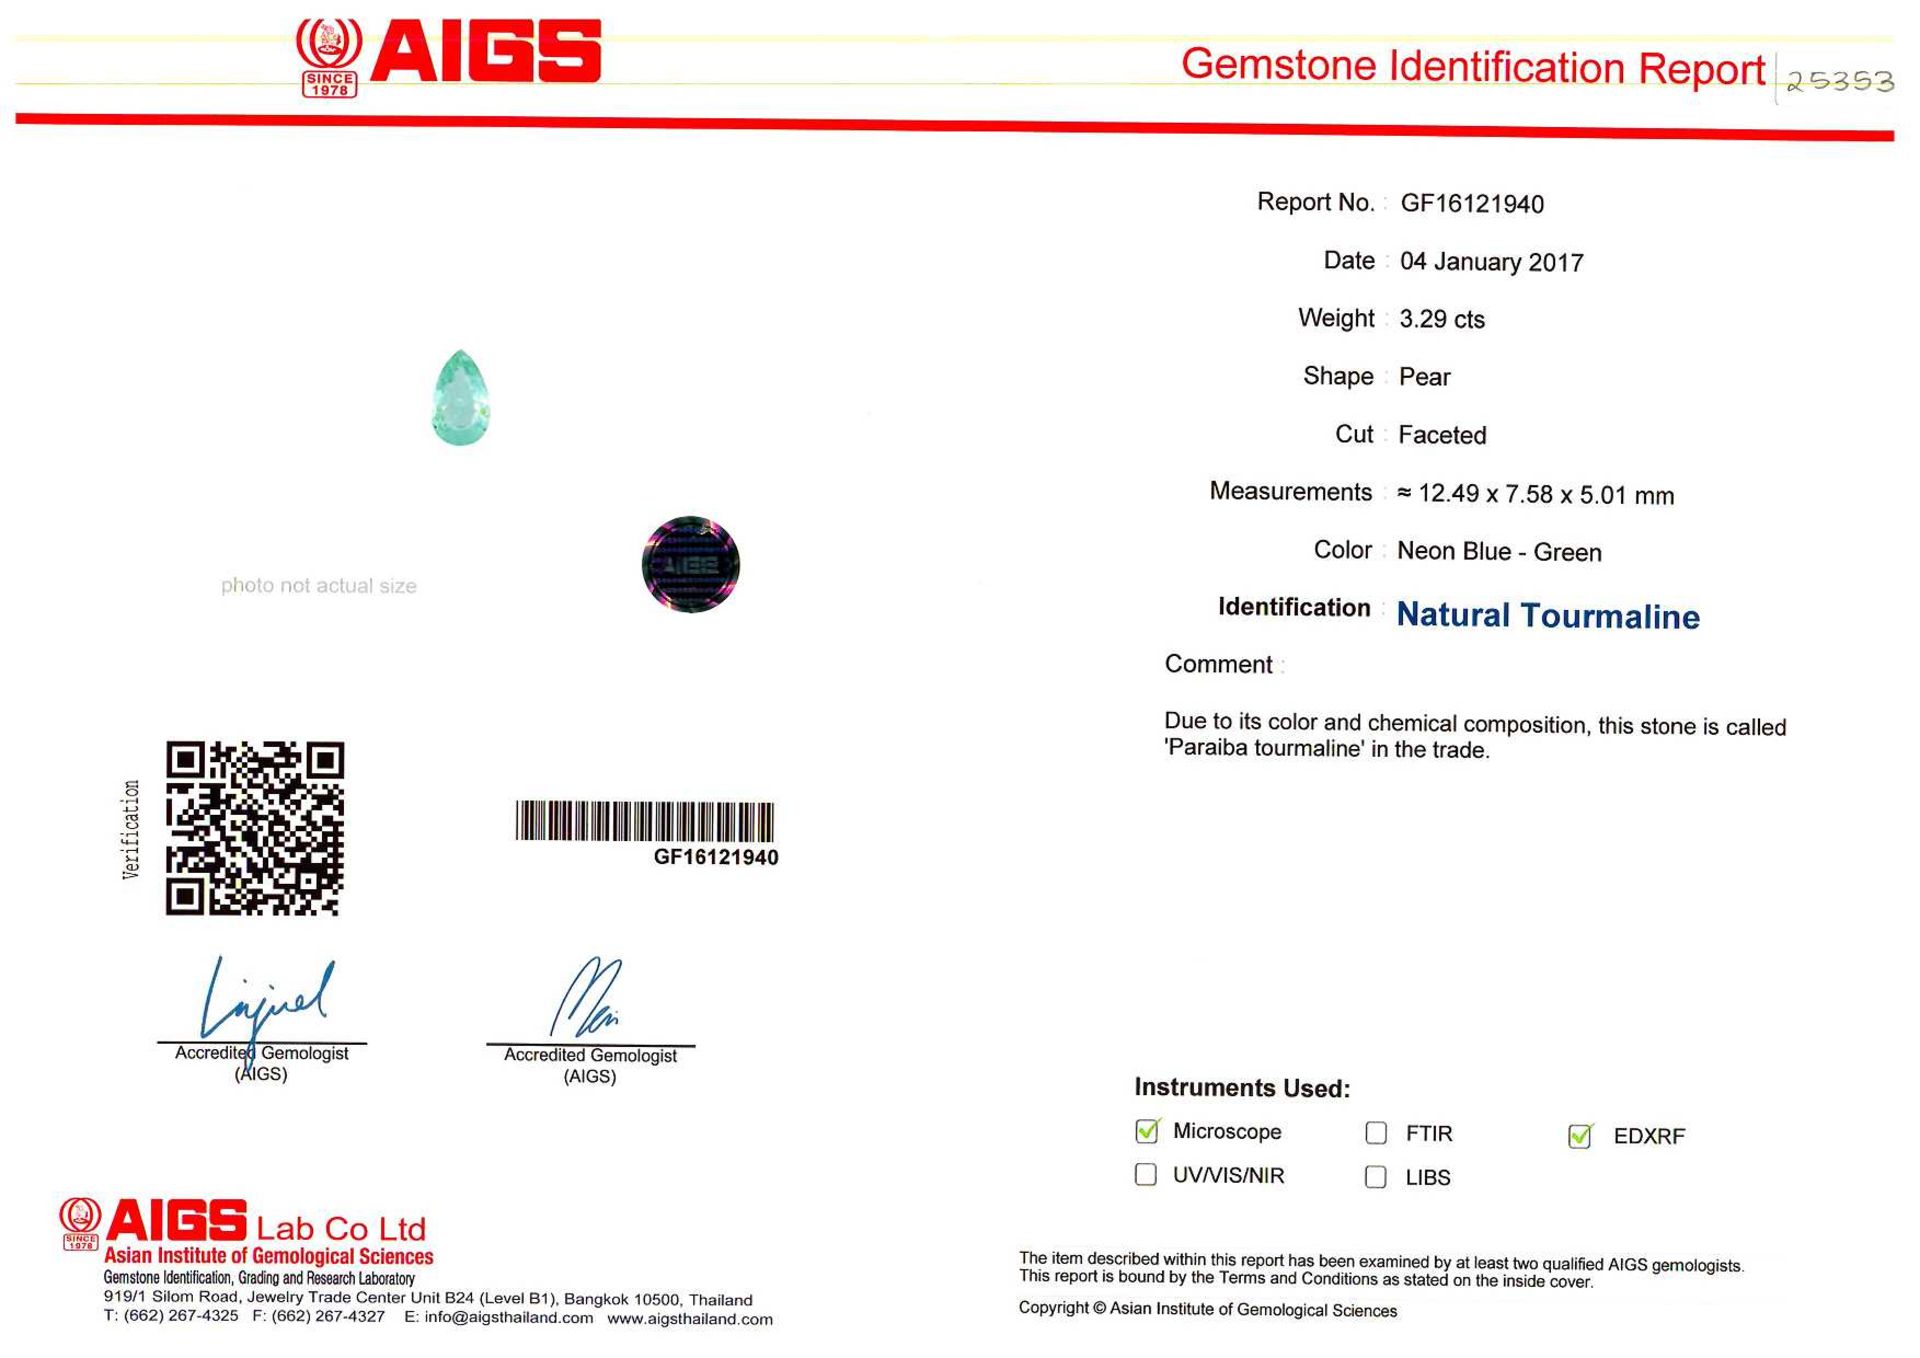 3.29ct pearshape Paraiba Tourmaline GIF certification GF16121940,appraisal 9950 - Bild 2 aus 2